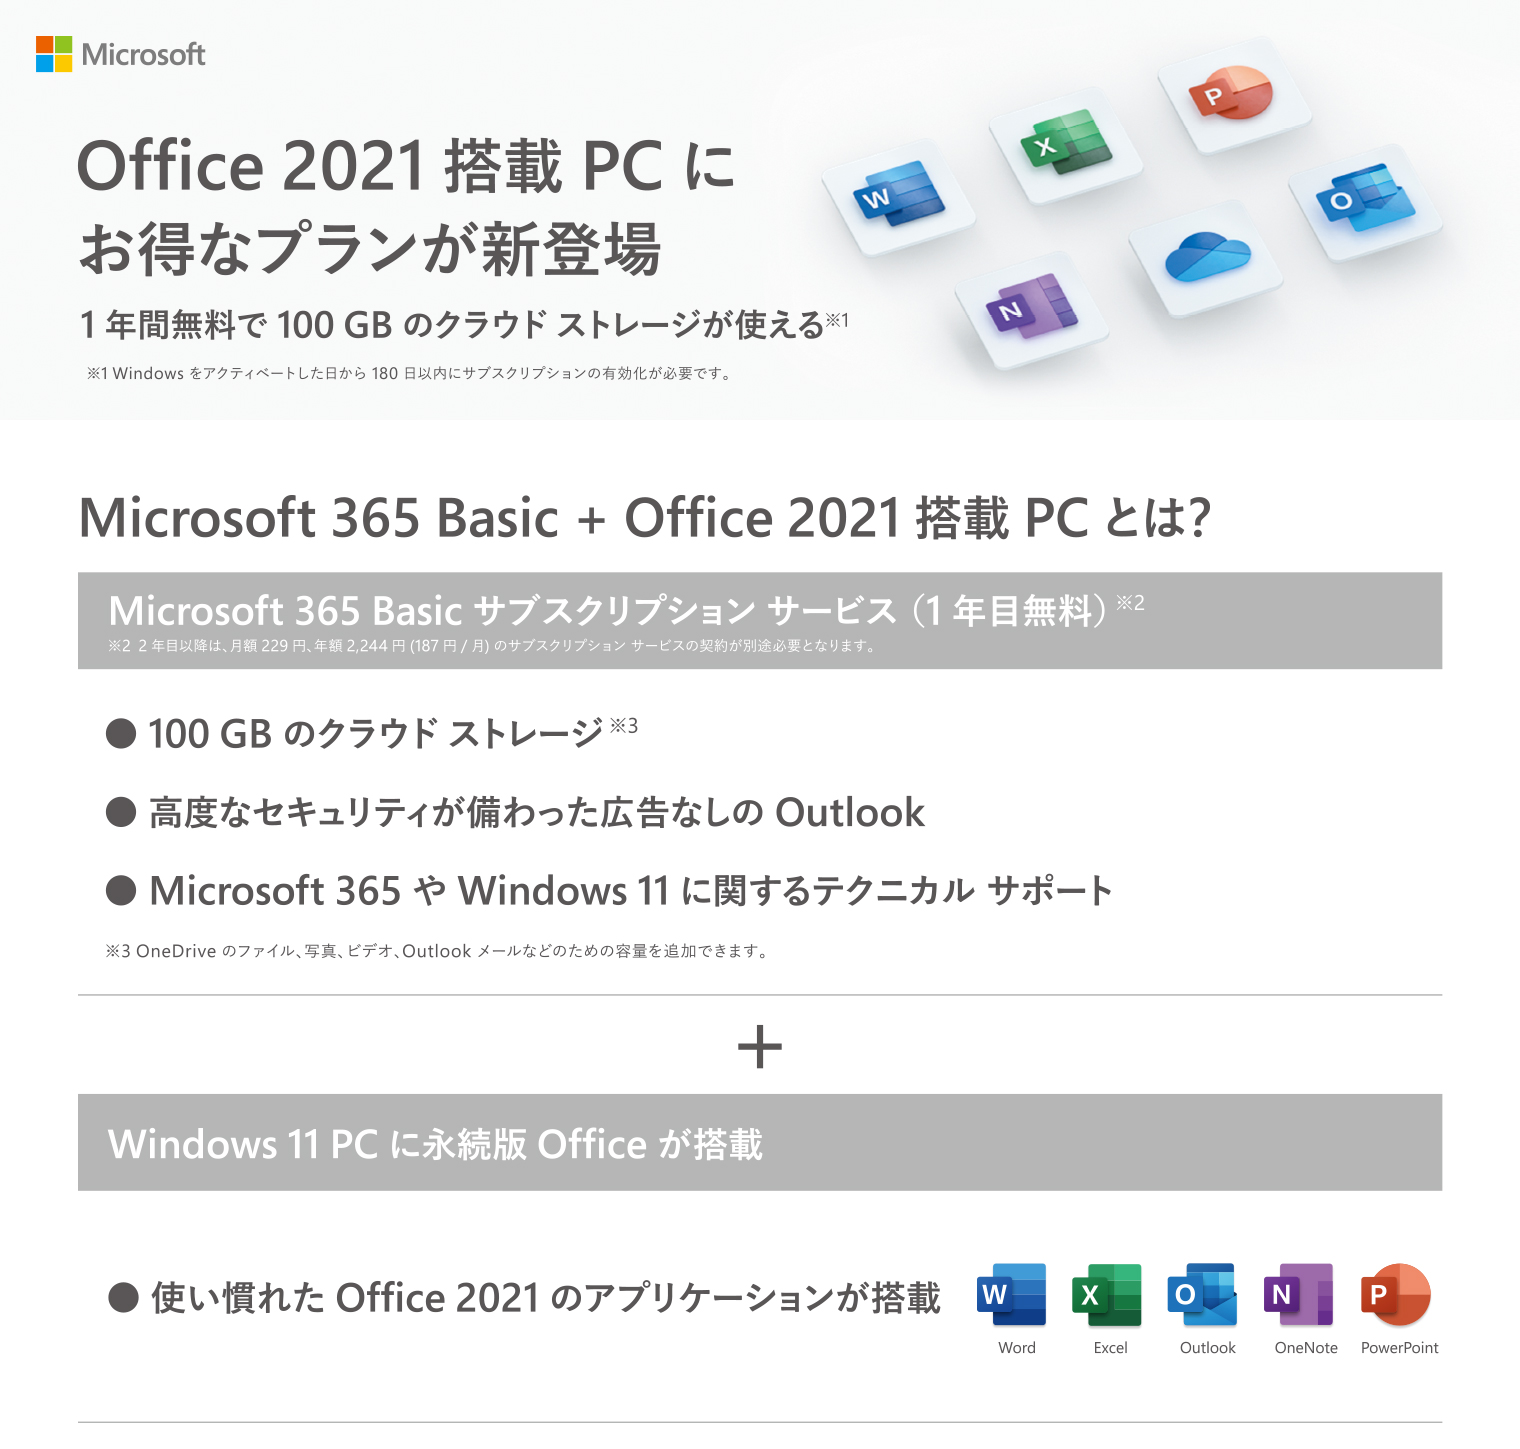 Office 2021搭載PCにお得なプランが新登場